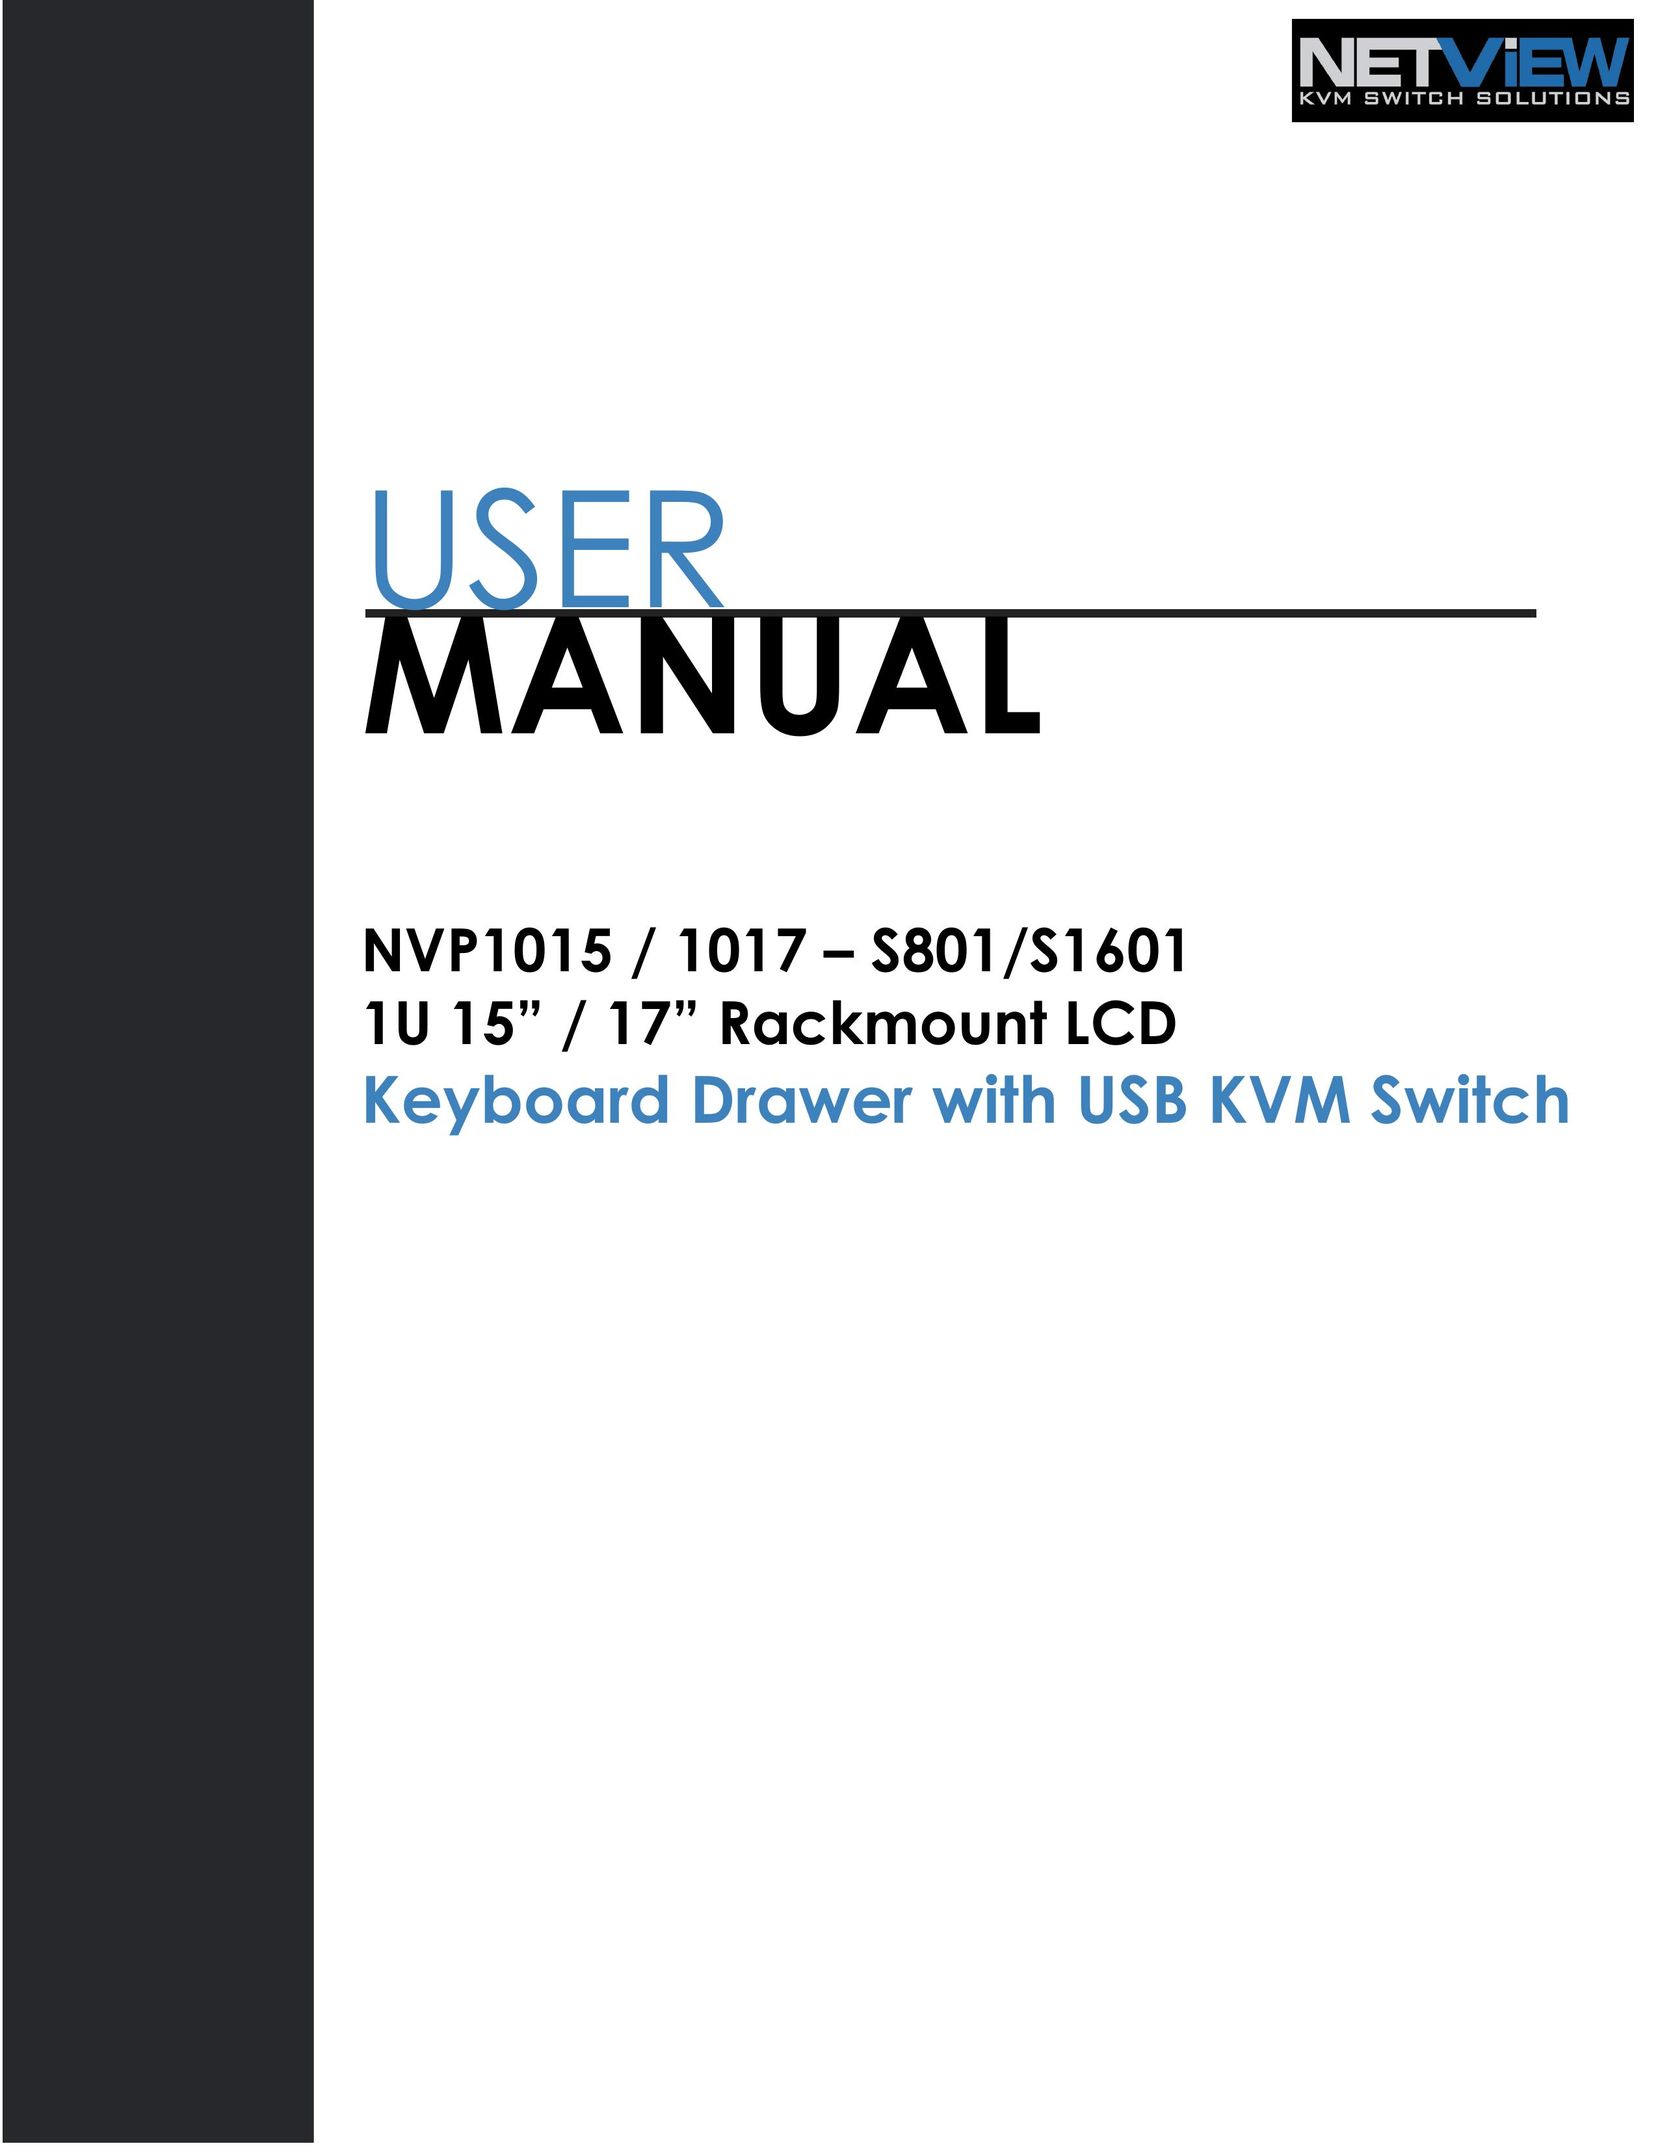 I-Tech Company NVP1015 TV Mount User Manual